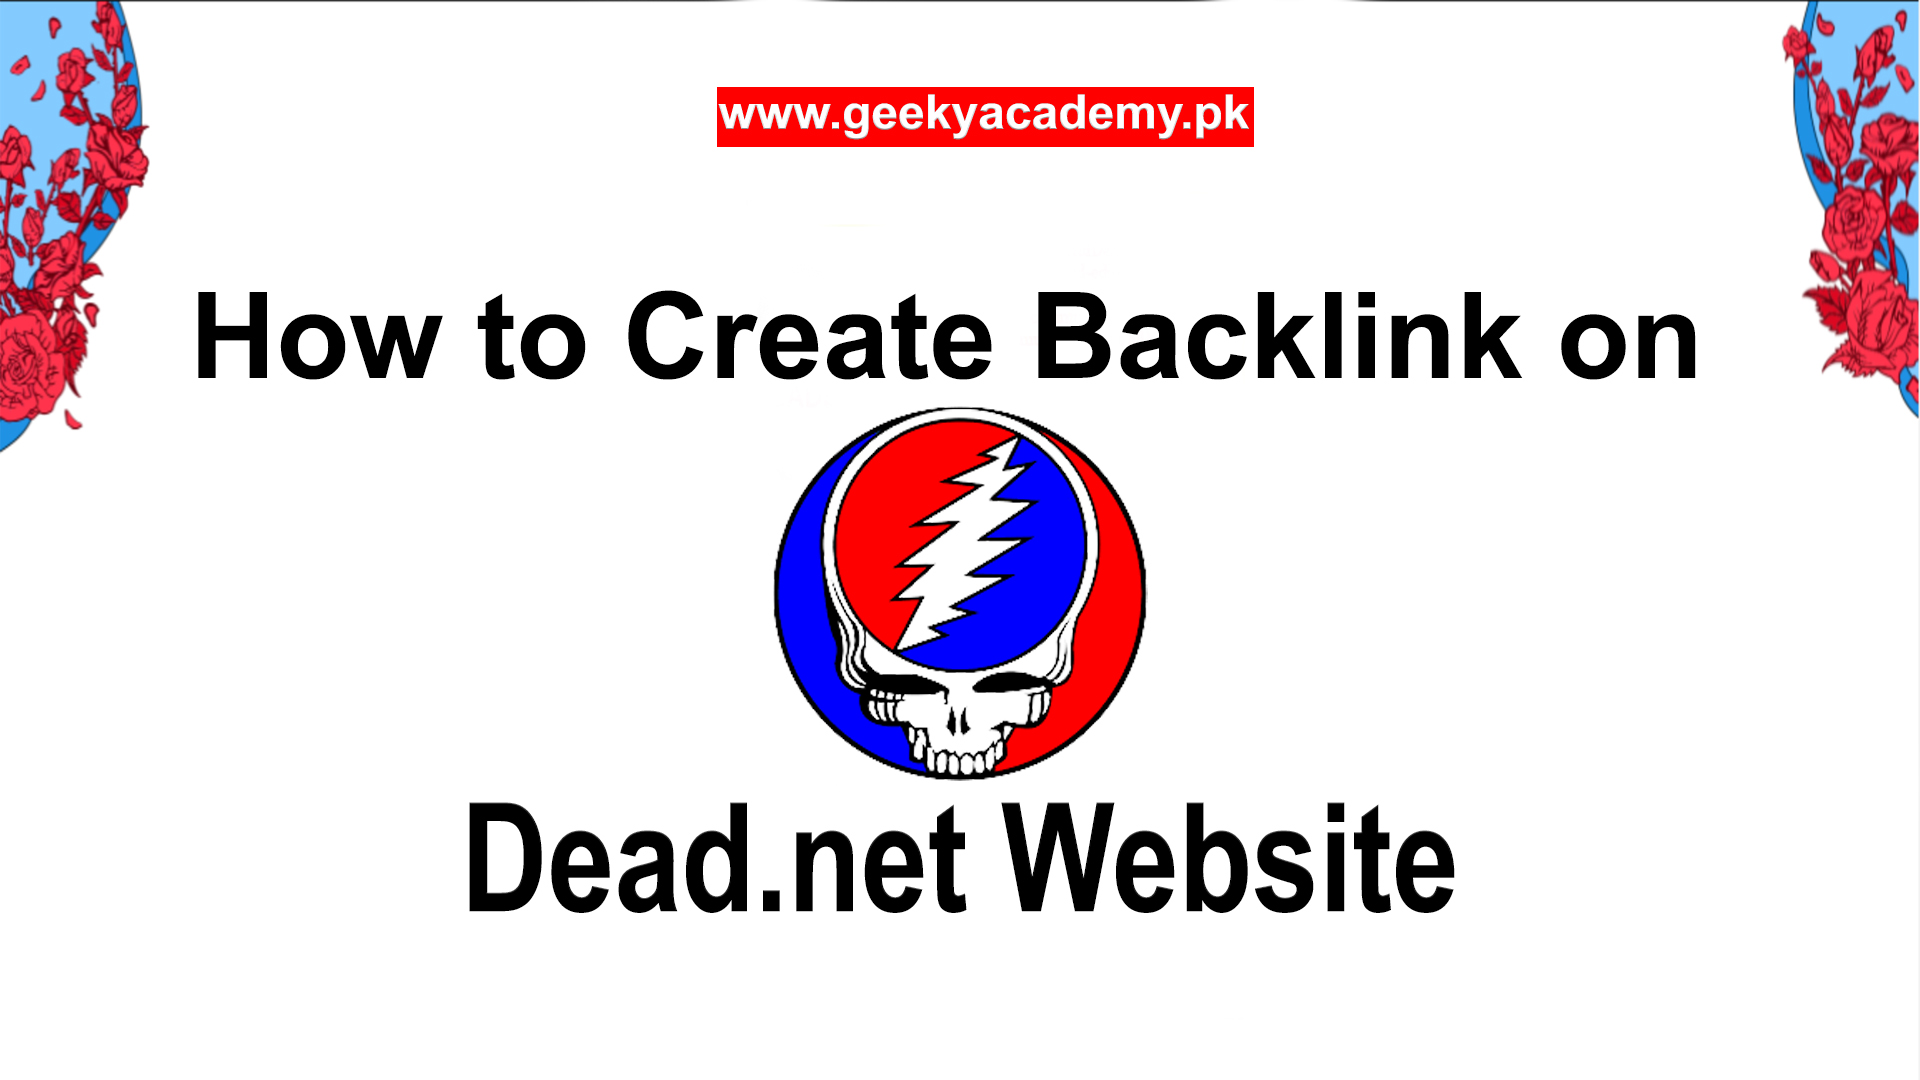 how to create backlink on dead.net website - Geeky Academy